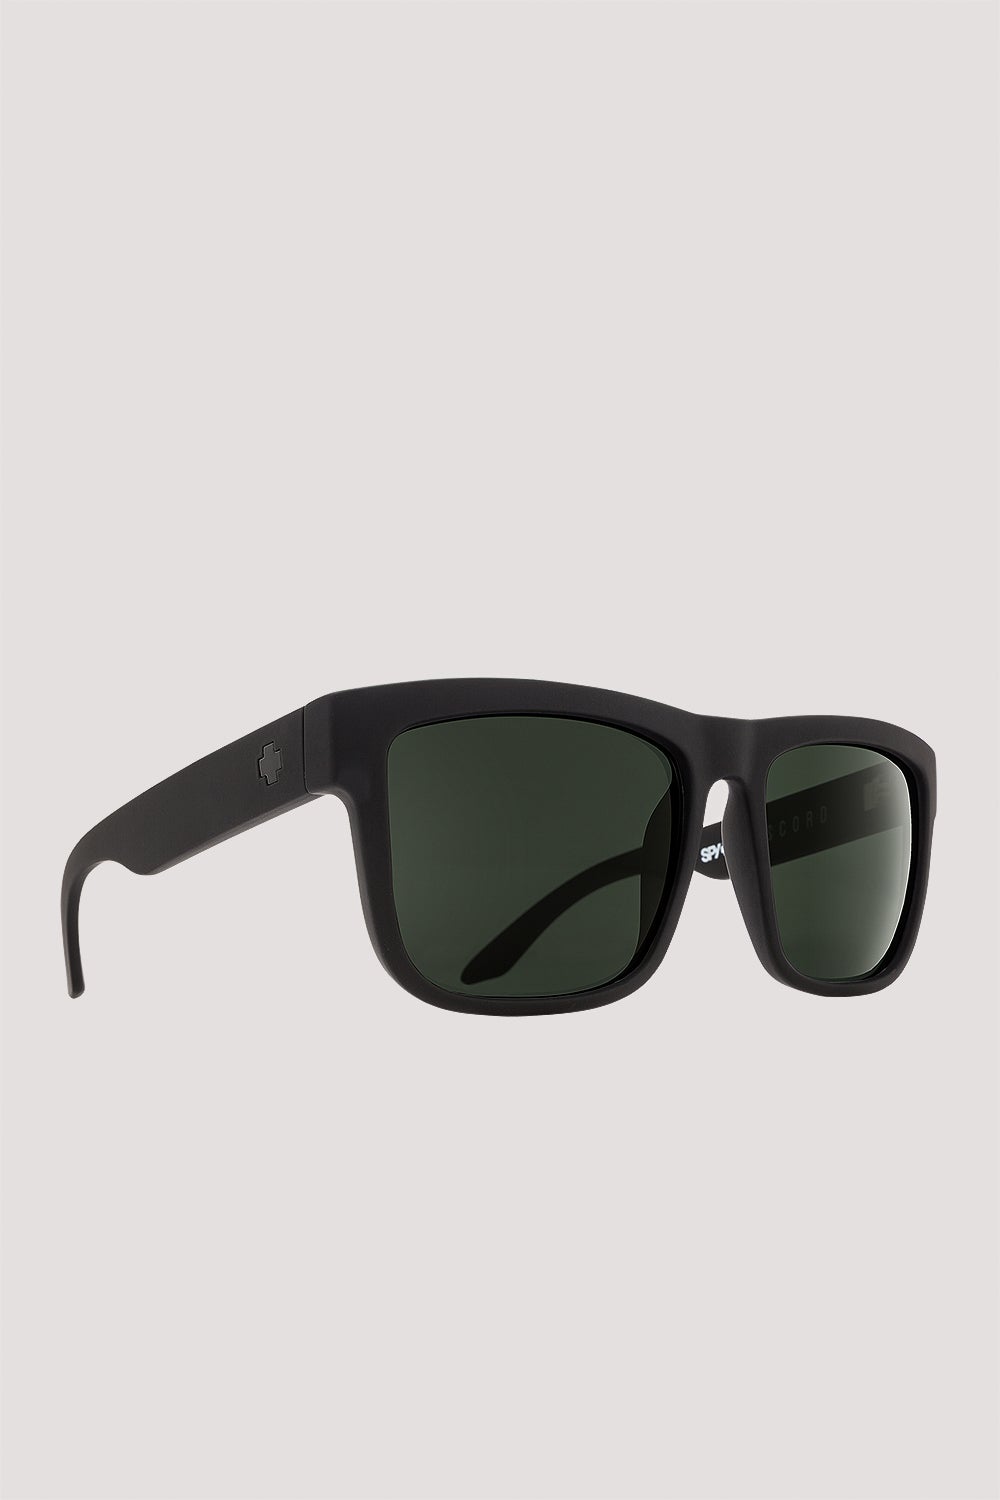 Spy Black Sunglasses - Discord | Pure Goalie Equipment